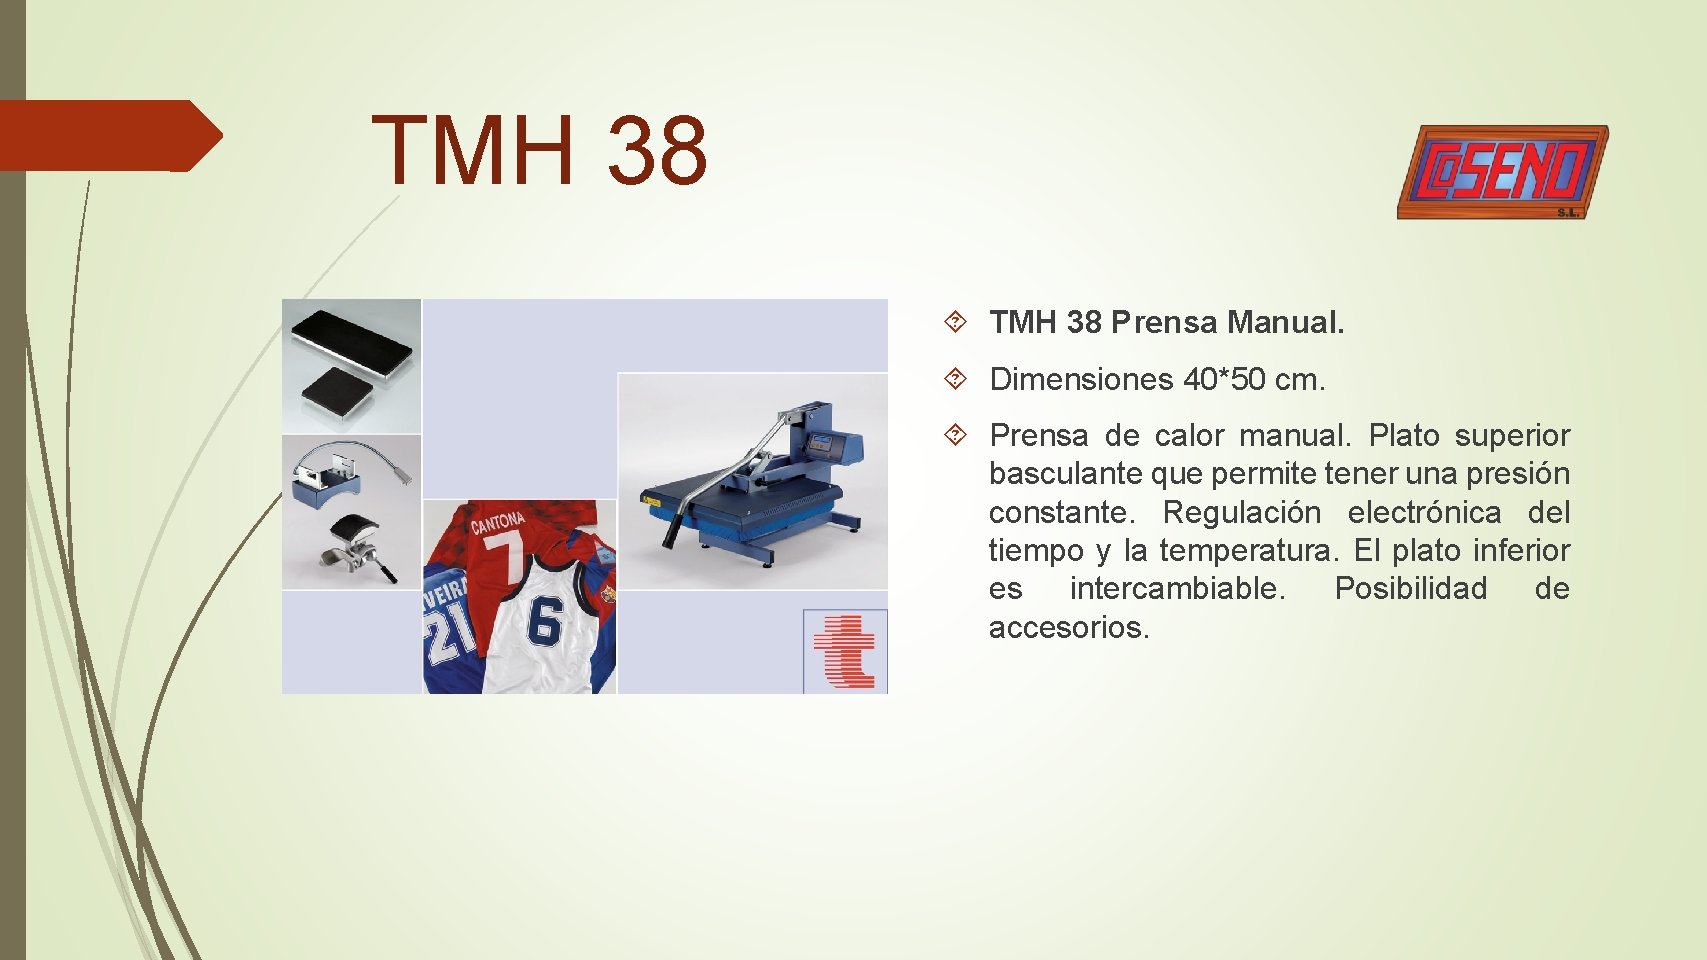 TMH 38 Prensa Manual. Dimensiones 40*50 cm. Prensa de calor manual. Plato superior basculante